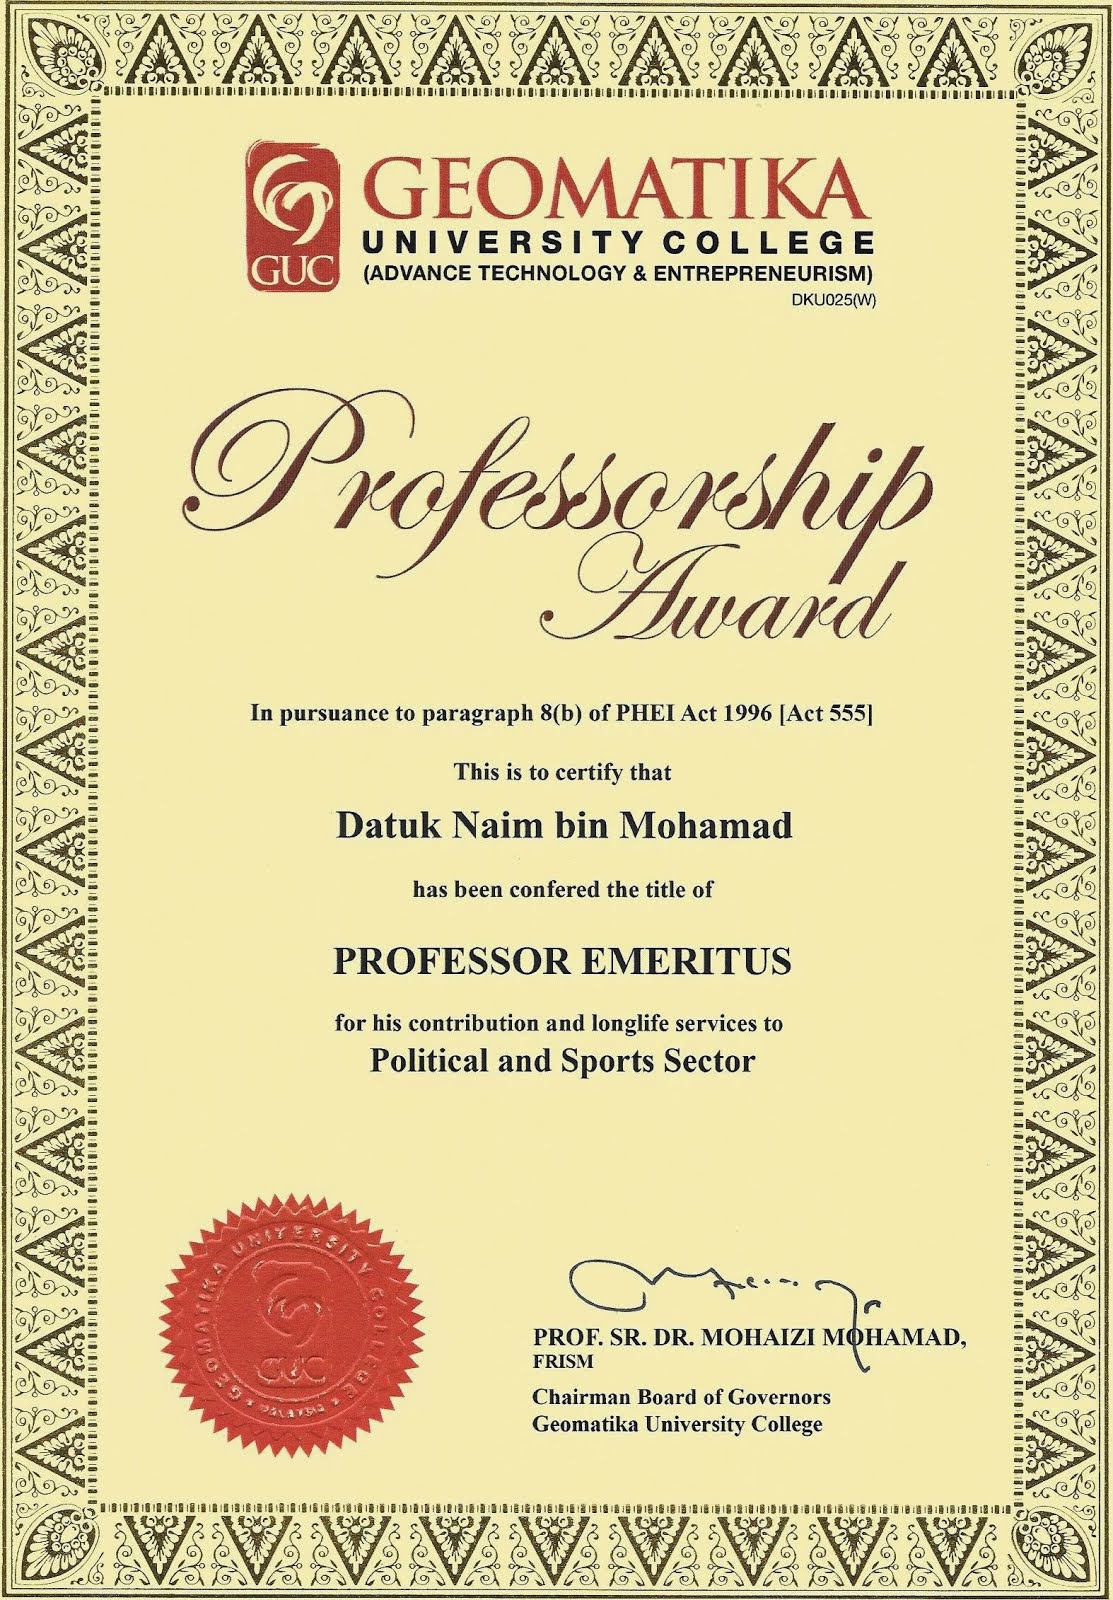 Professorship Award